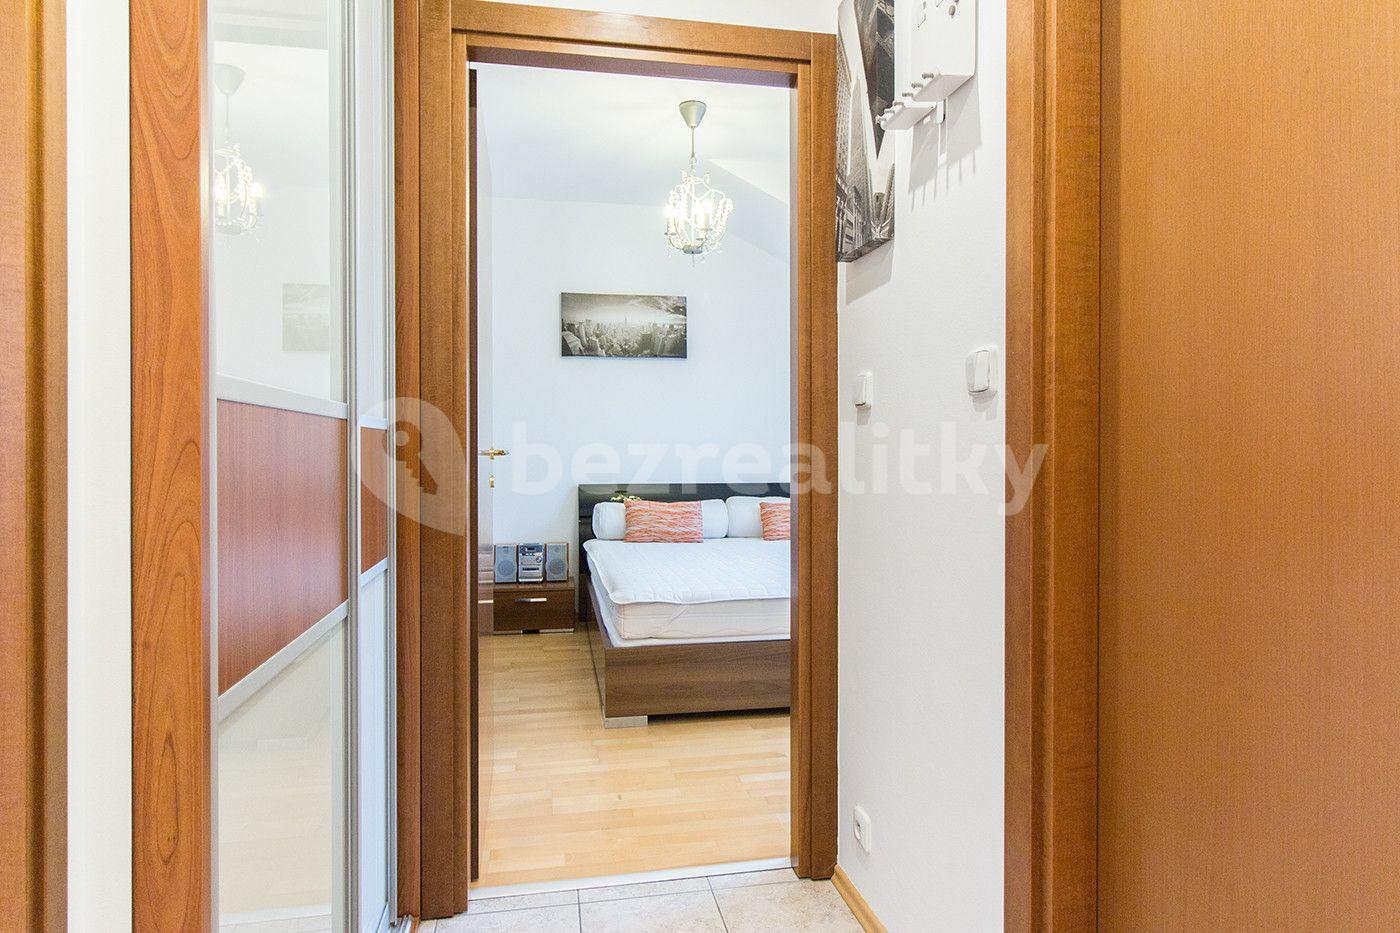 1 bedroom with open-plan kitchen flat for sale, 46 m², Paťanka, Prague, Prague